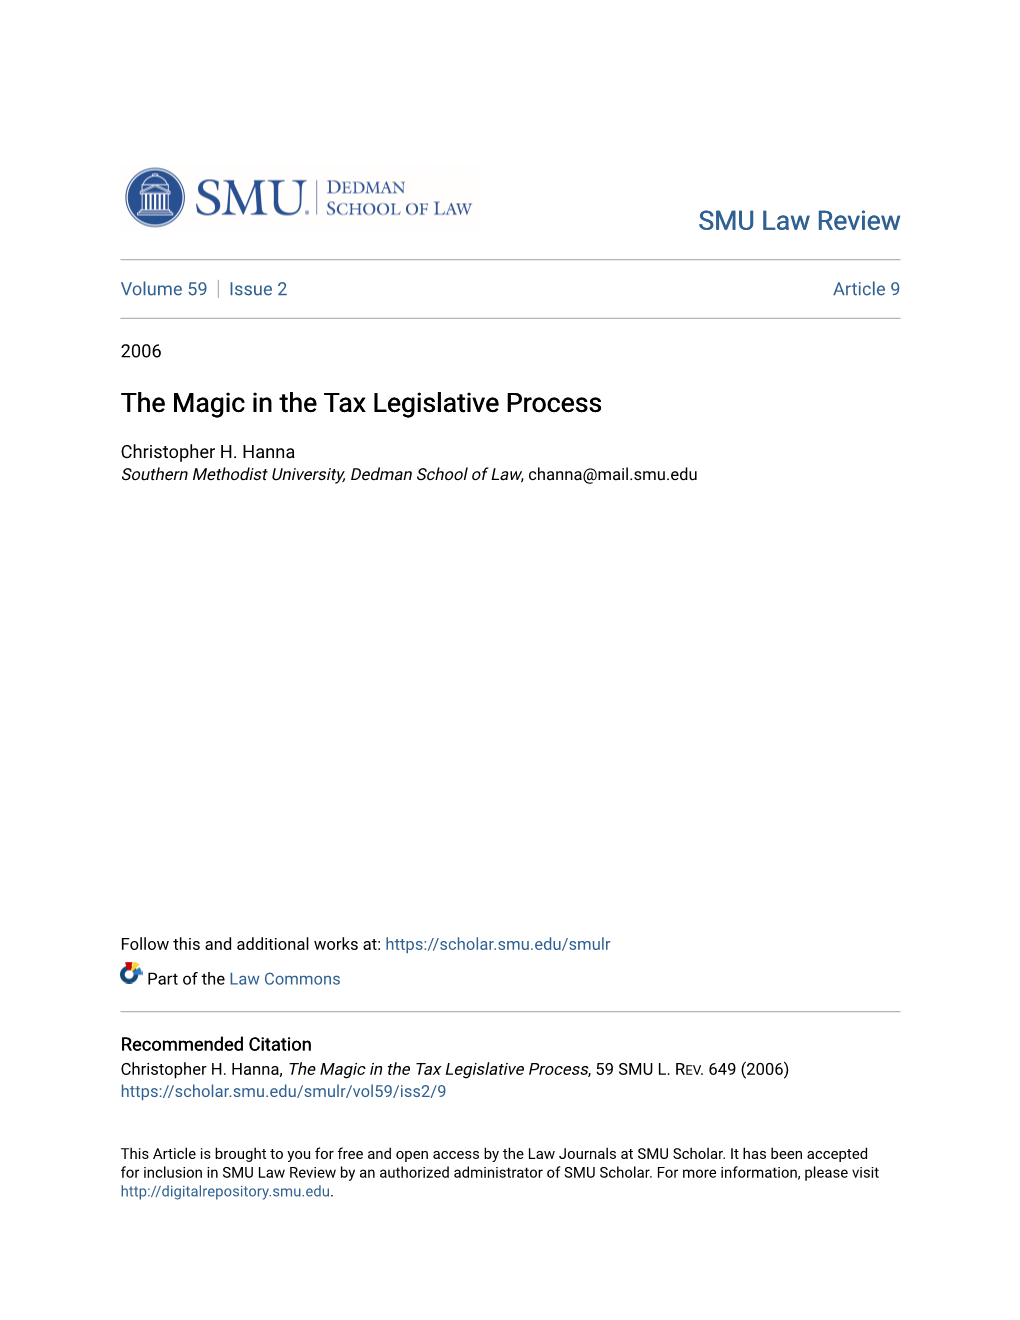 The Magic in the Tax Legislative Process